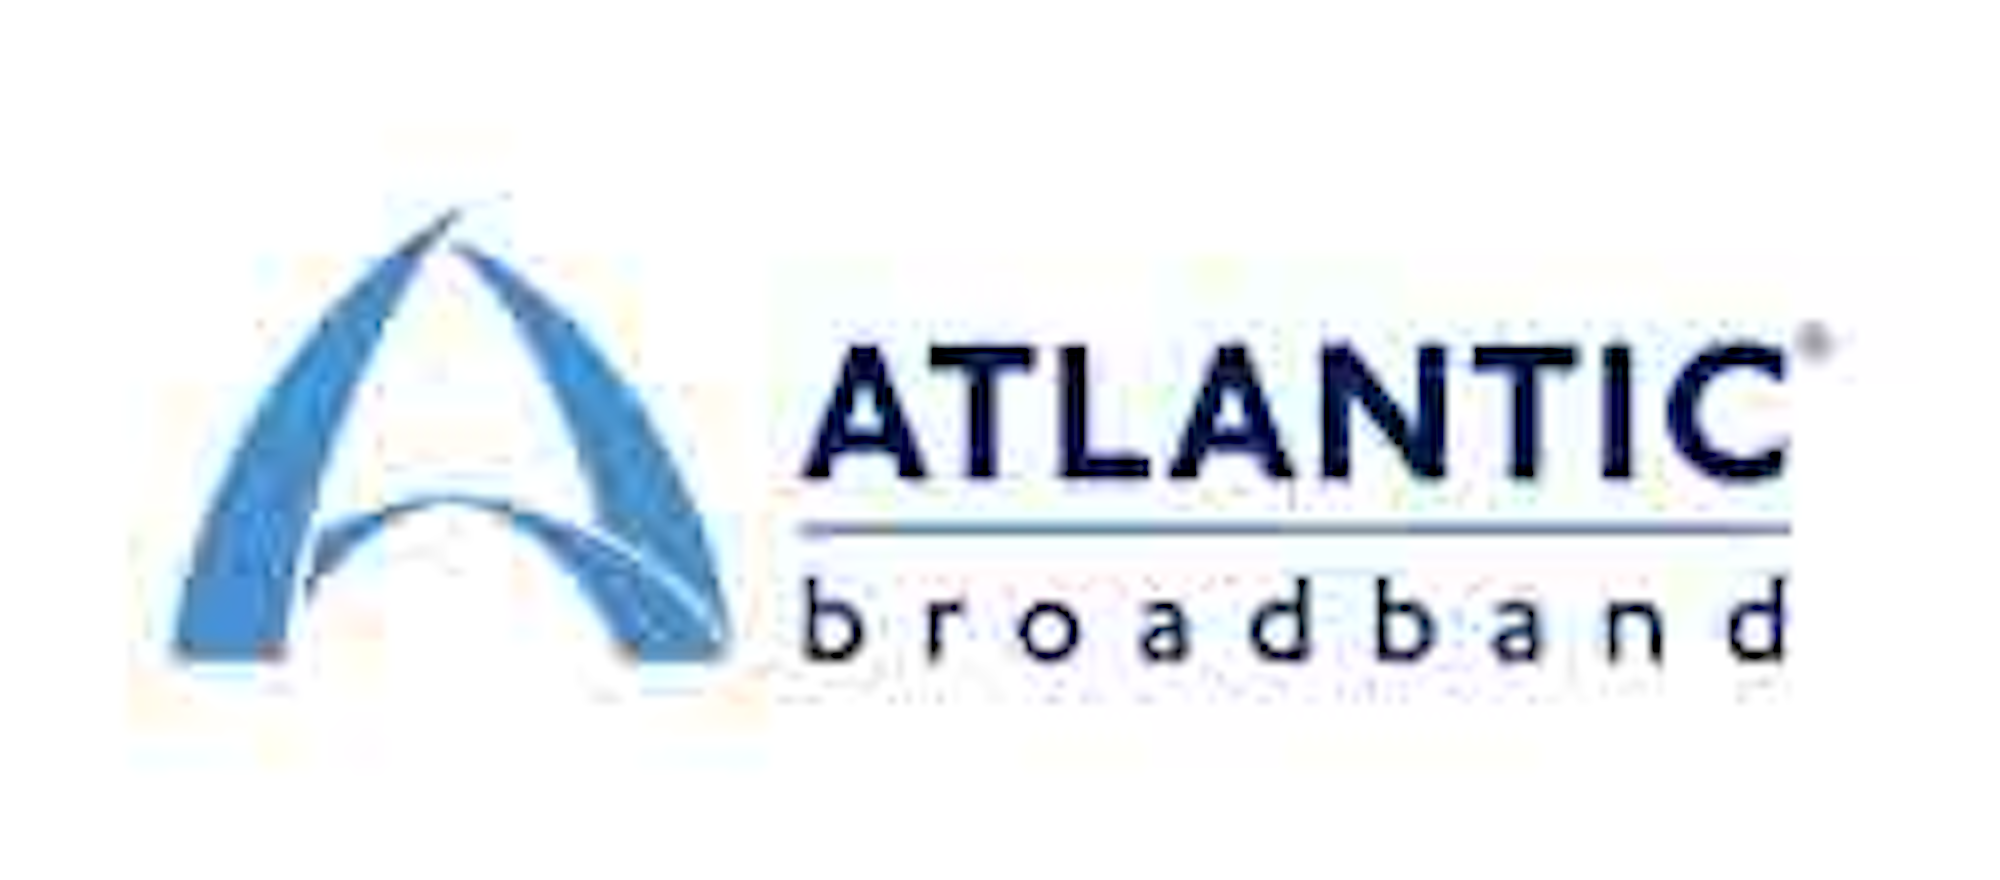 atlantic broadband business plans